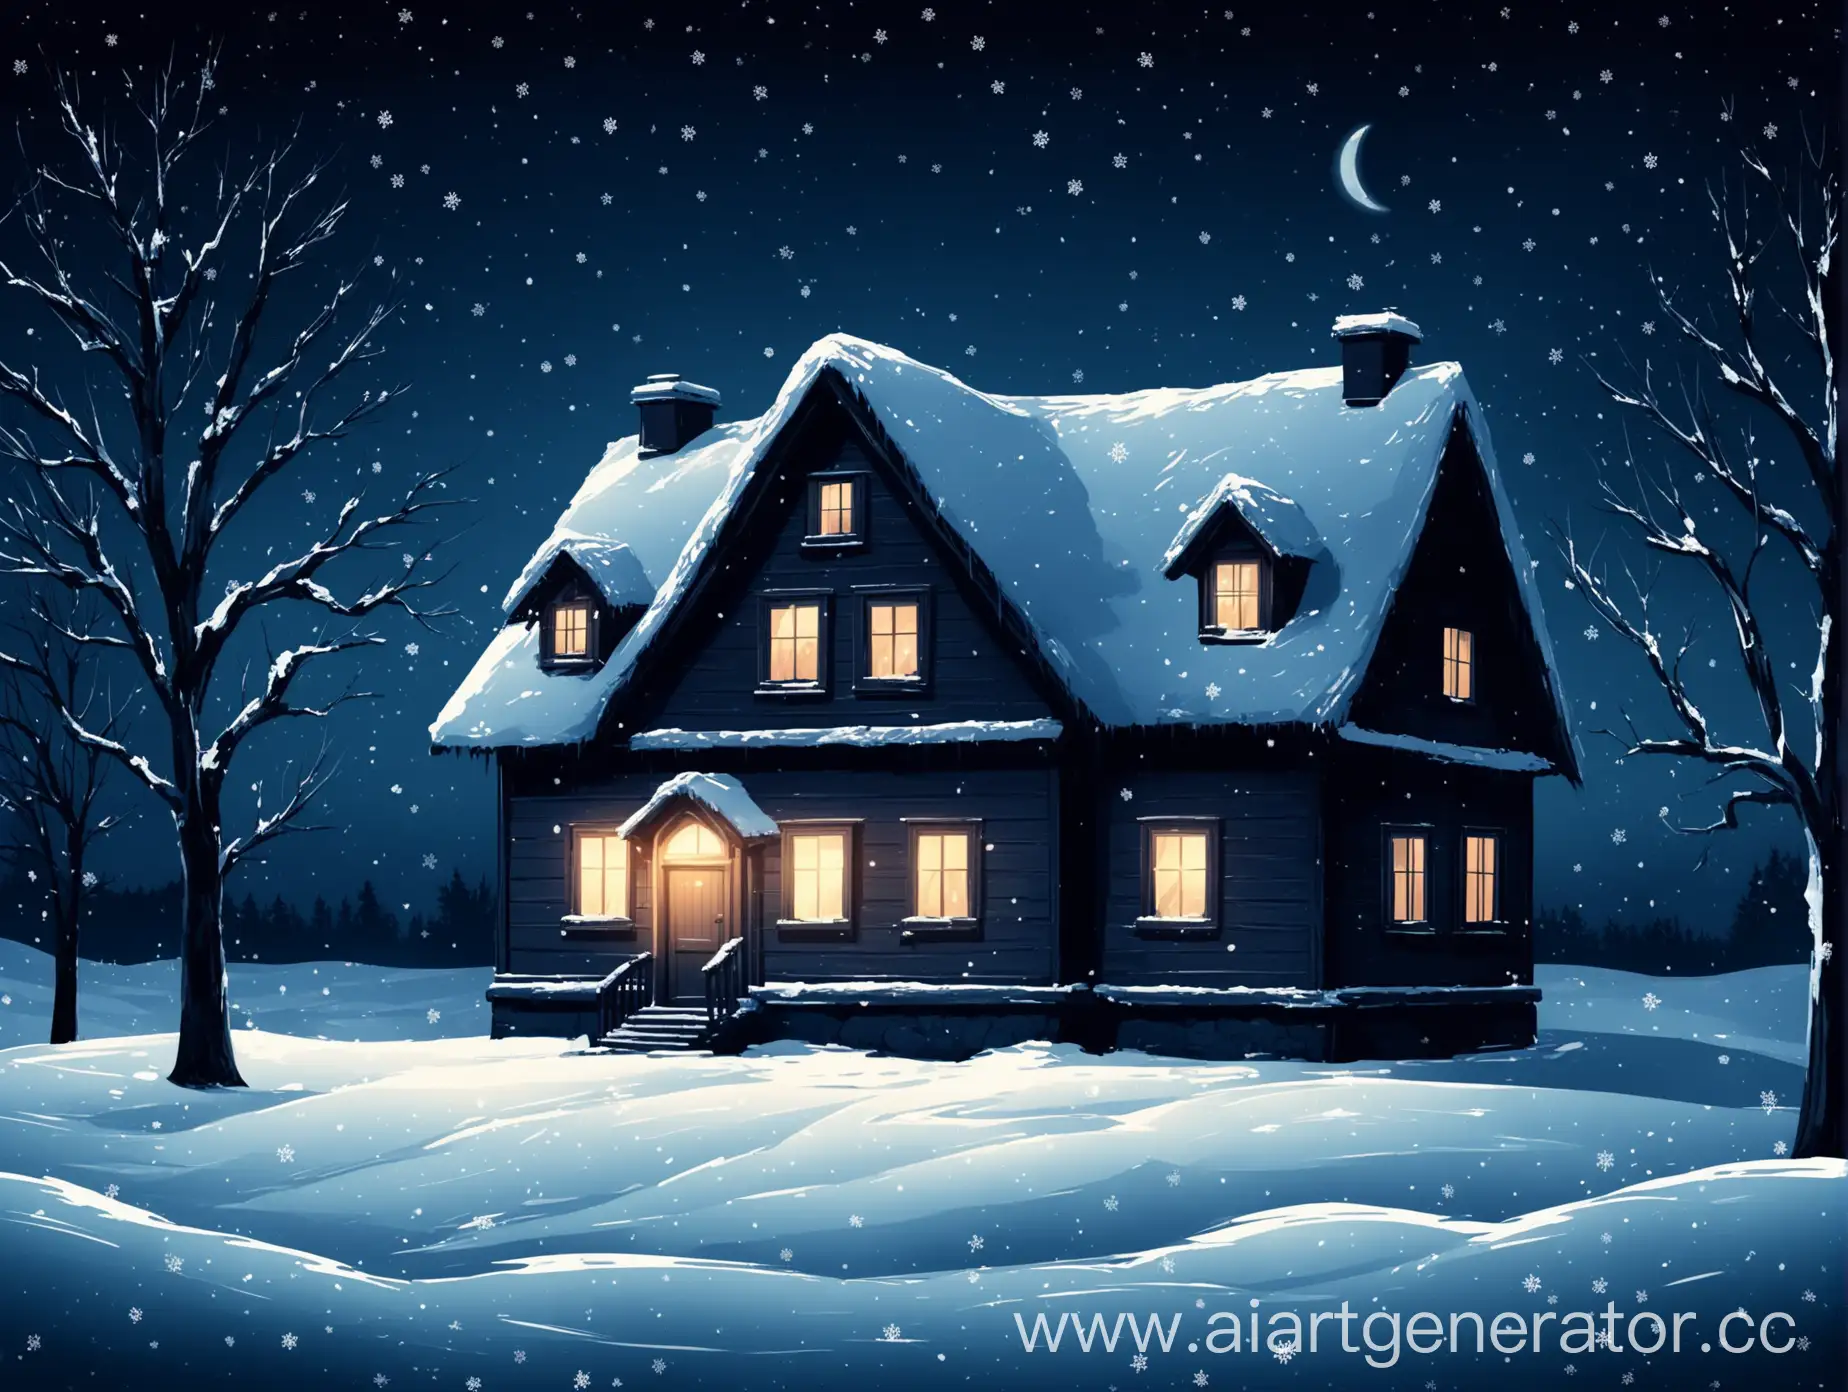 Cozy-Winter-Night-Illuminated-House-in-Snowy-Landscape